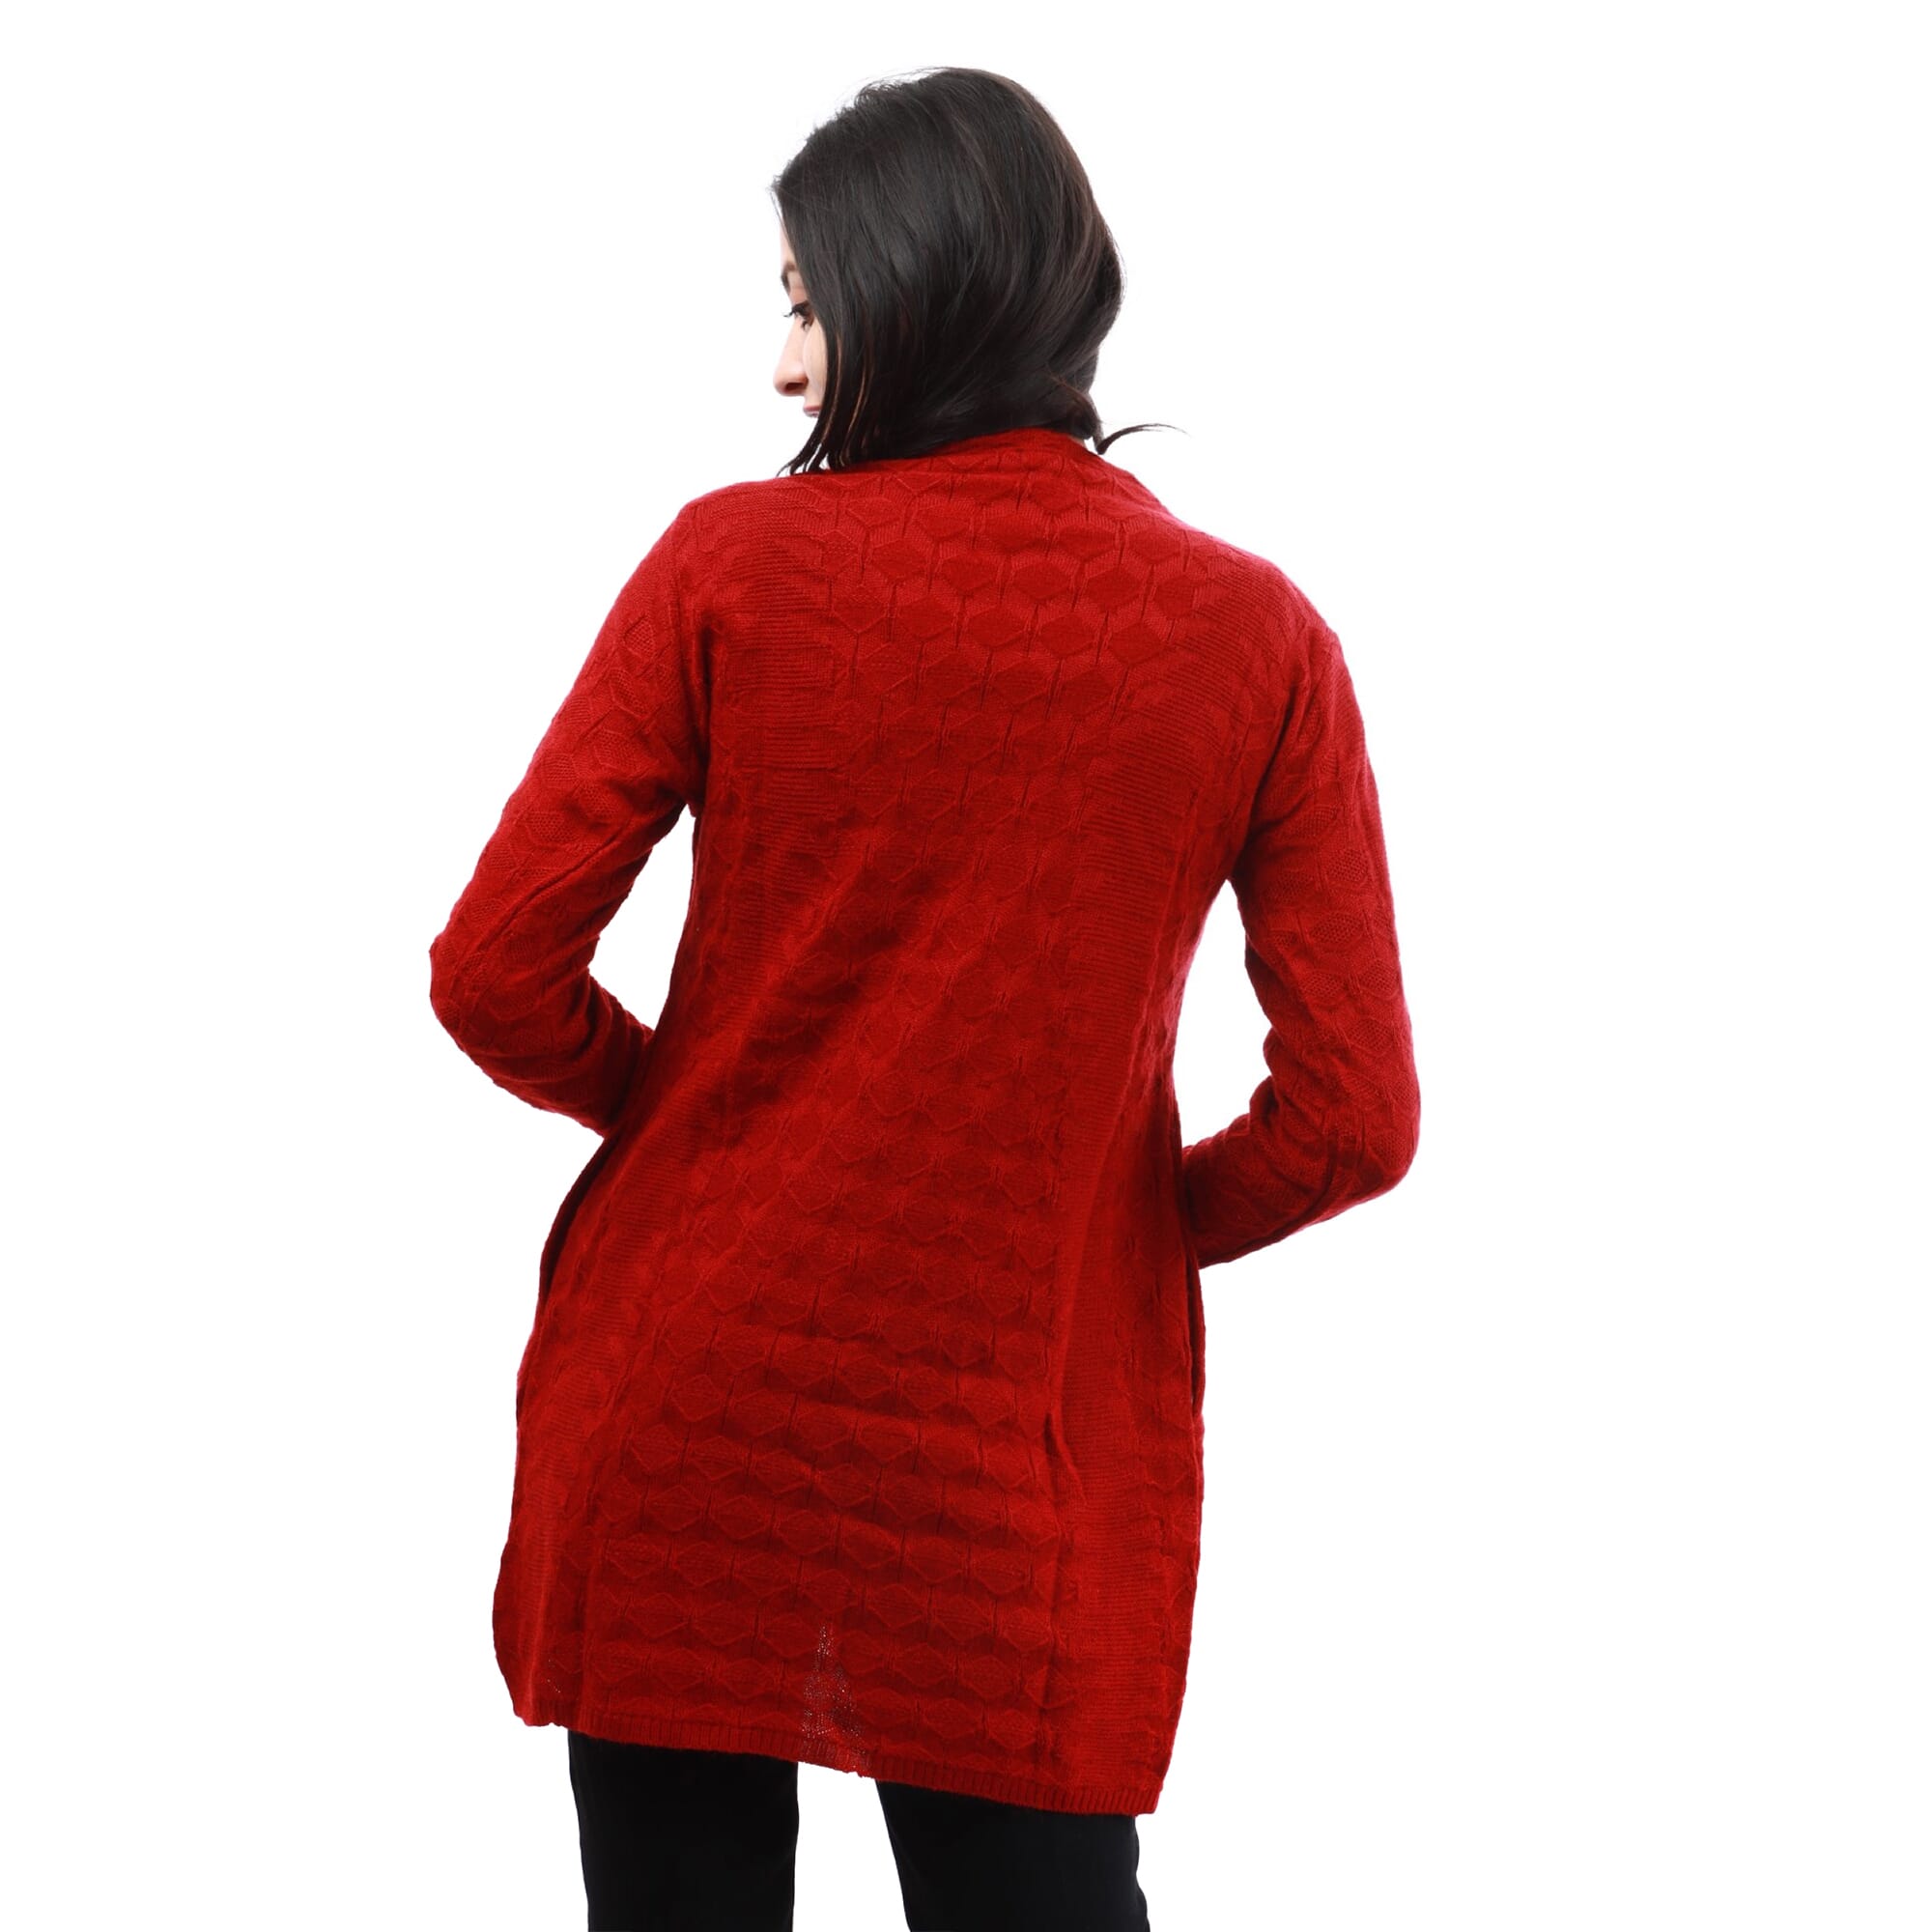 Shop Lady Cardigan Self Design FS Red at Woollen Wear